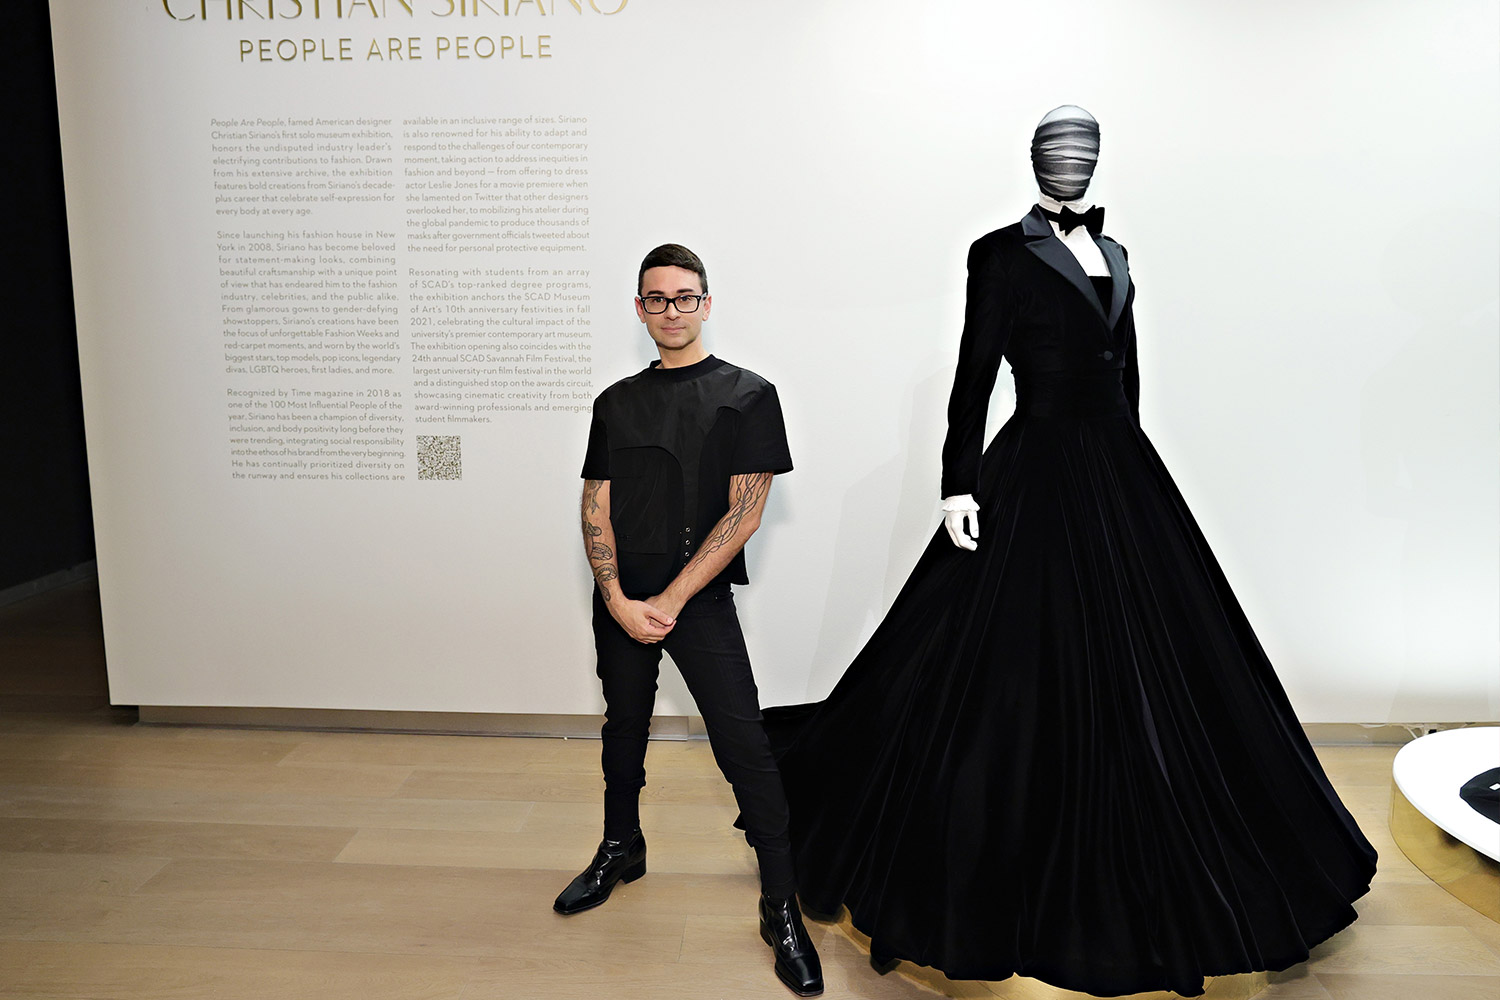 Designer stands next to a tuxedo dress in his museum exhibit